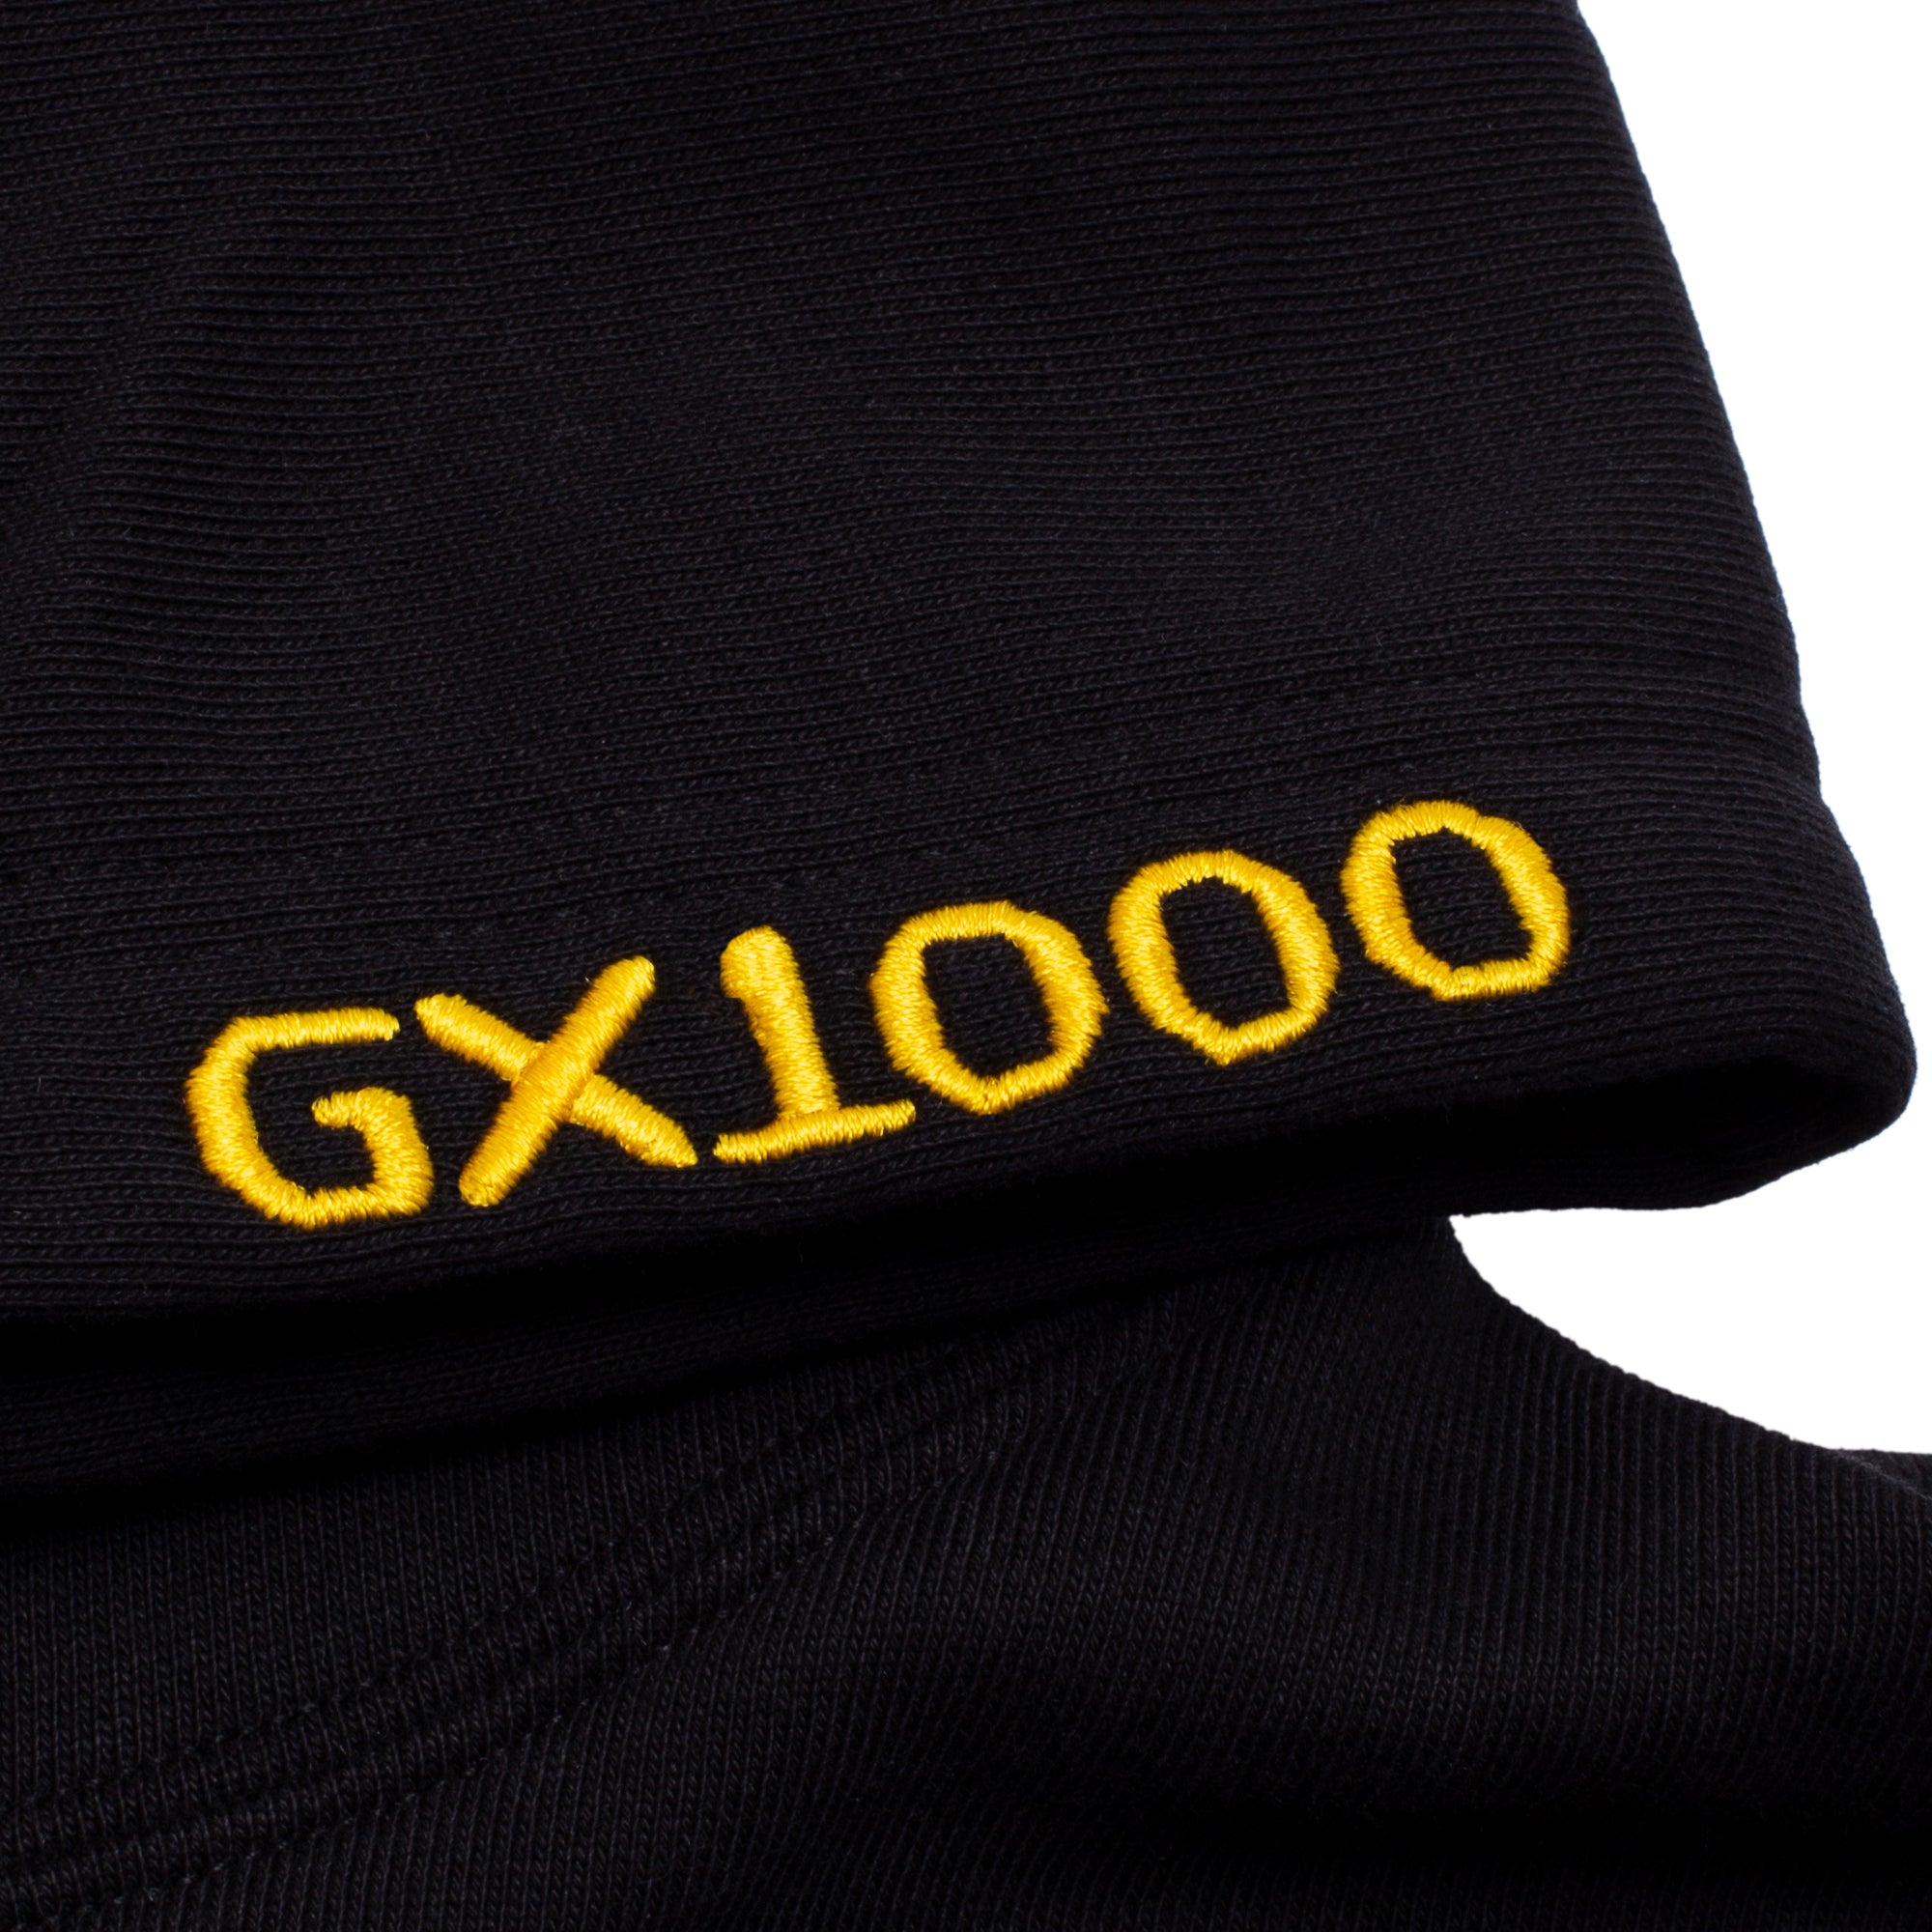 GX1000 - Sketch Hood "Ash"